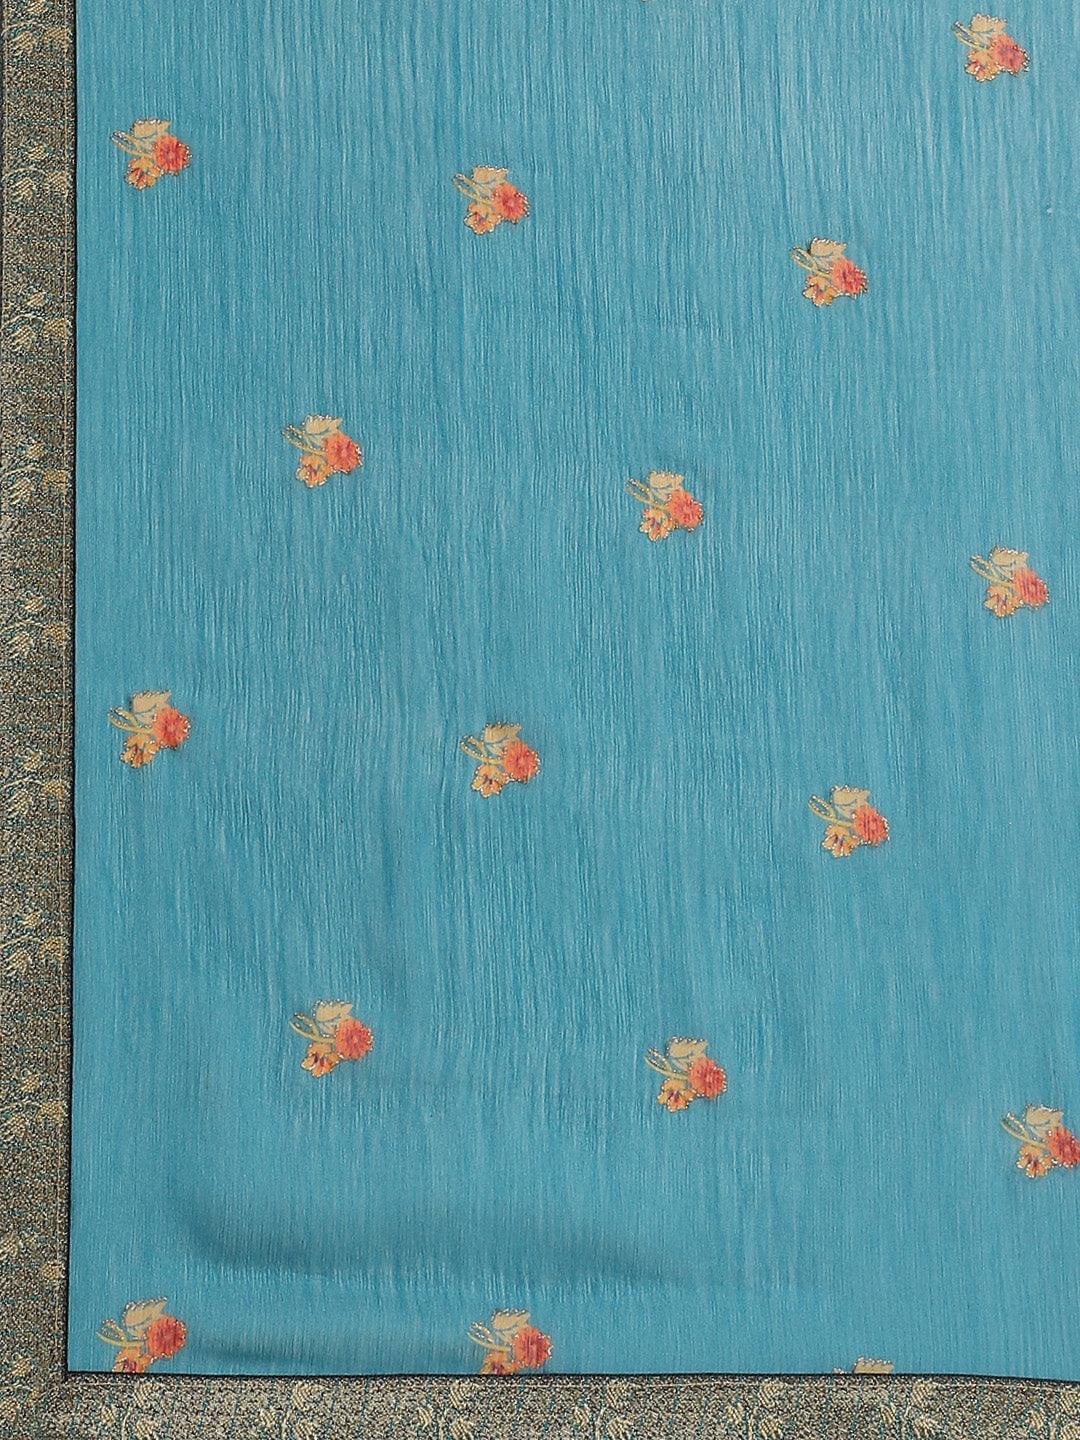 Blue Printed Chiffon Saree - Libas